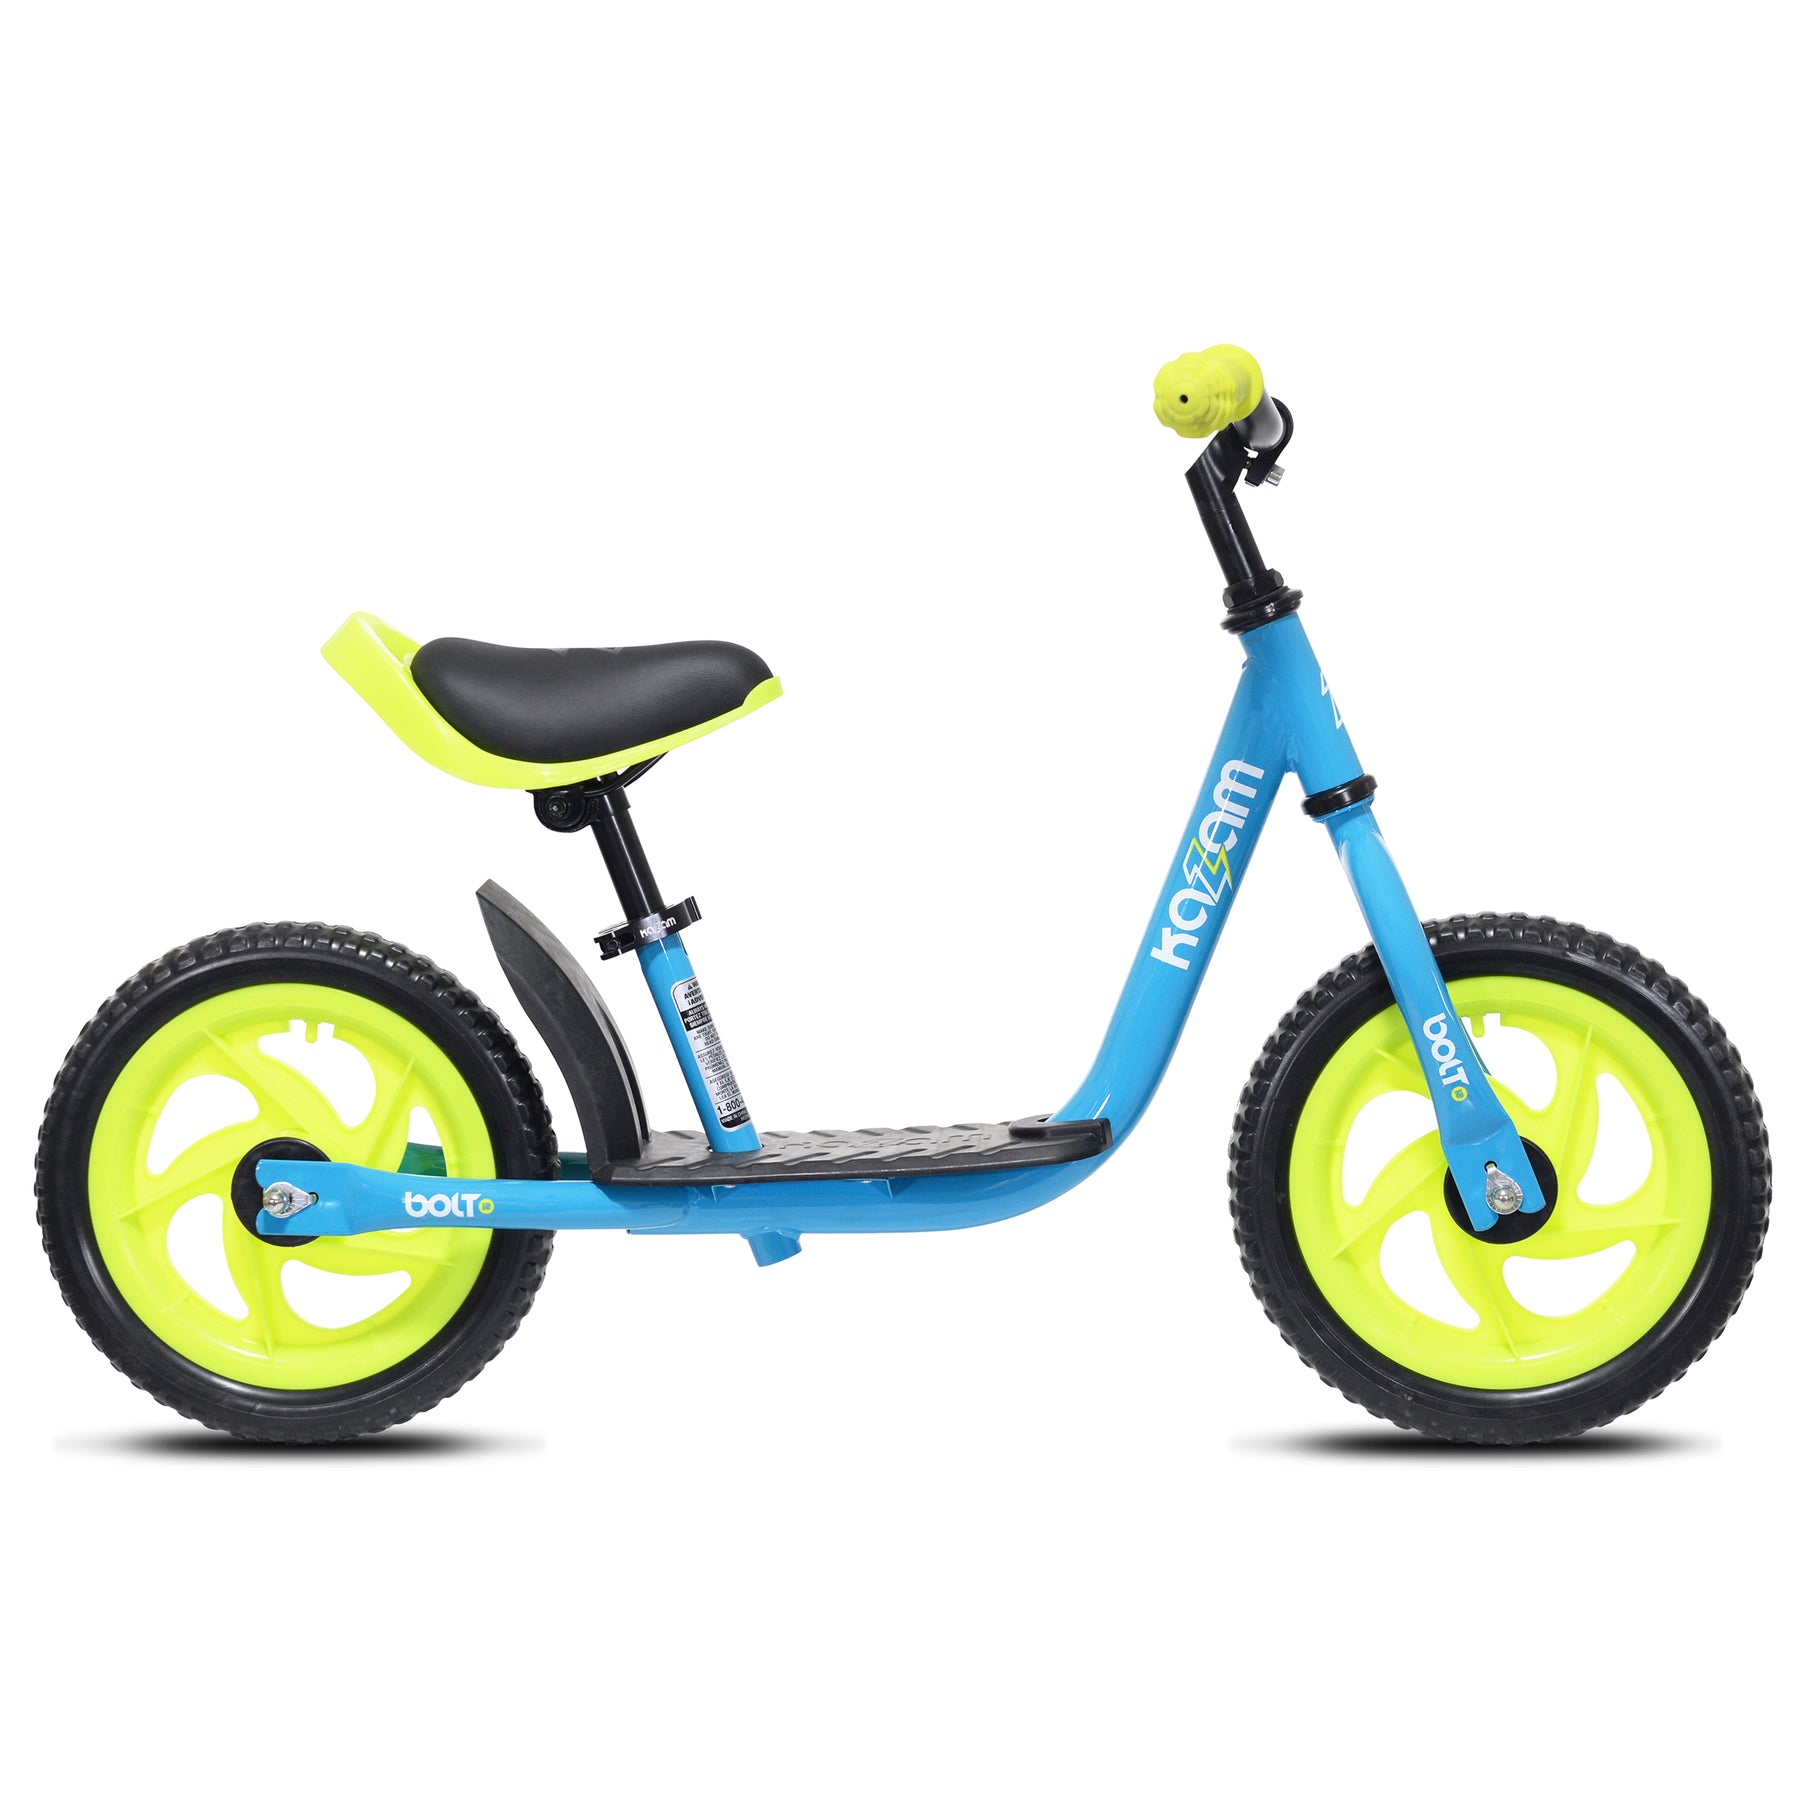 12" Kazam Bolt | Balance Bike for Kids Ages 2-4